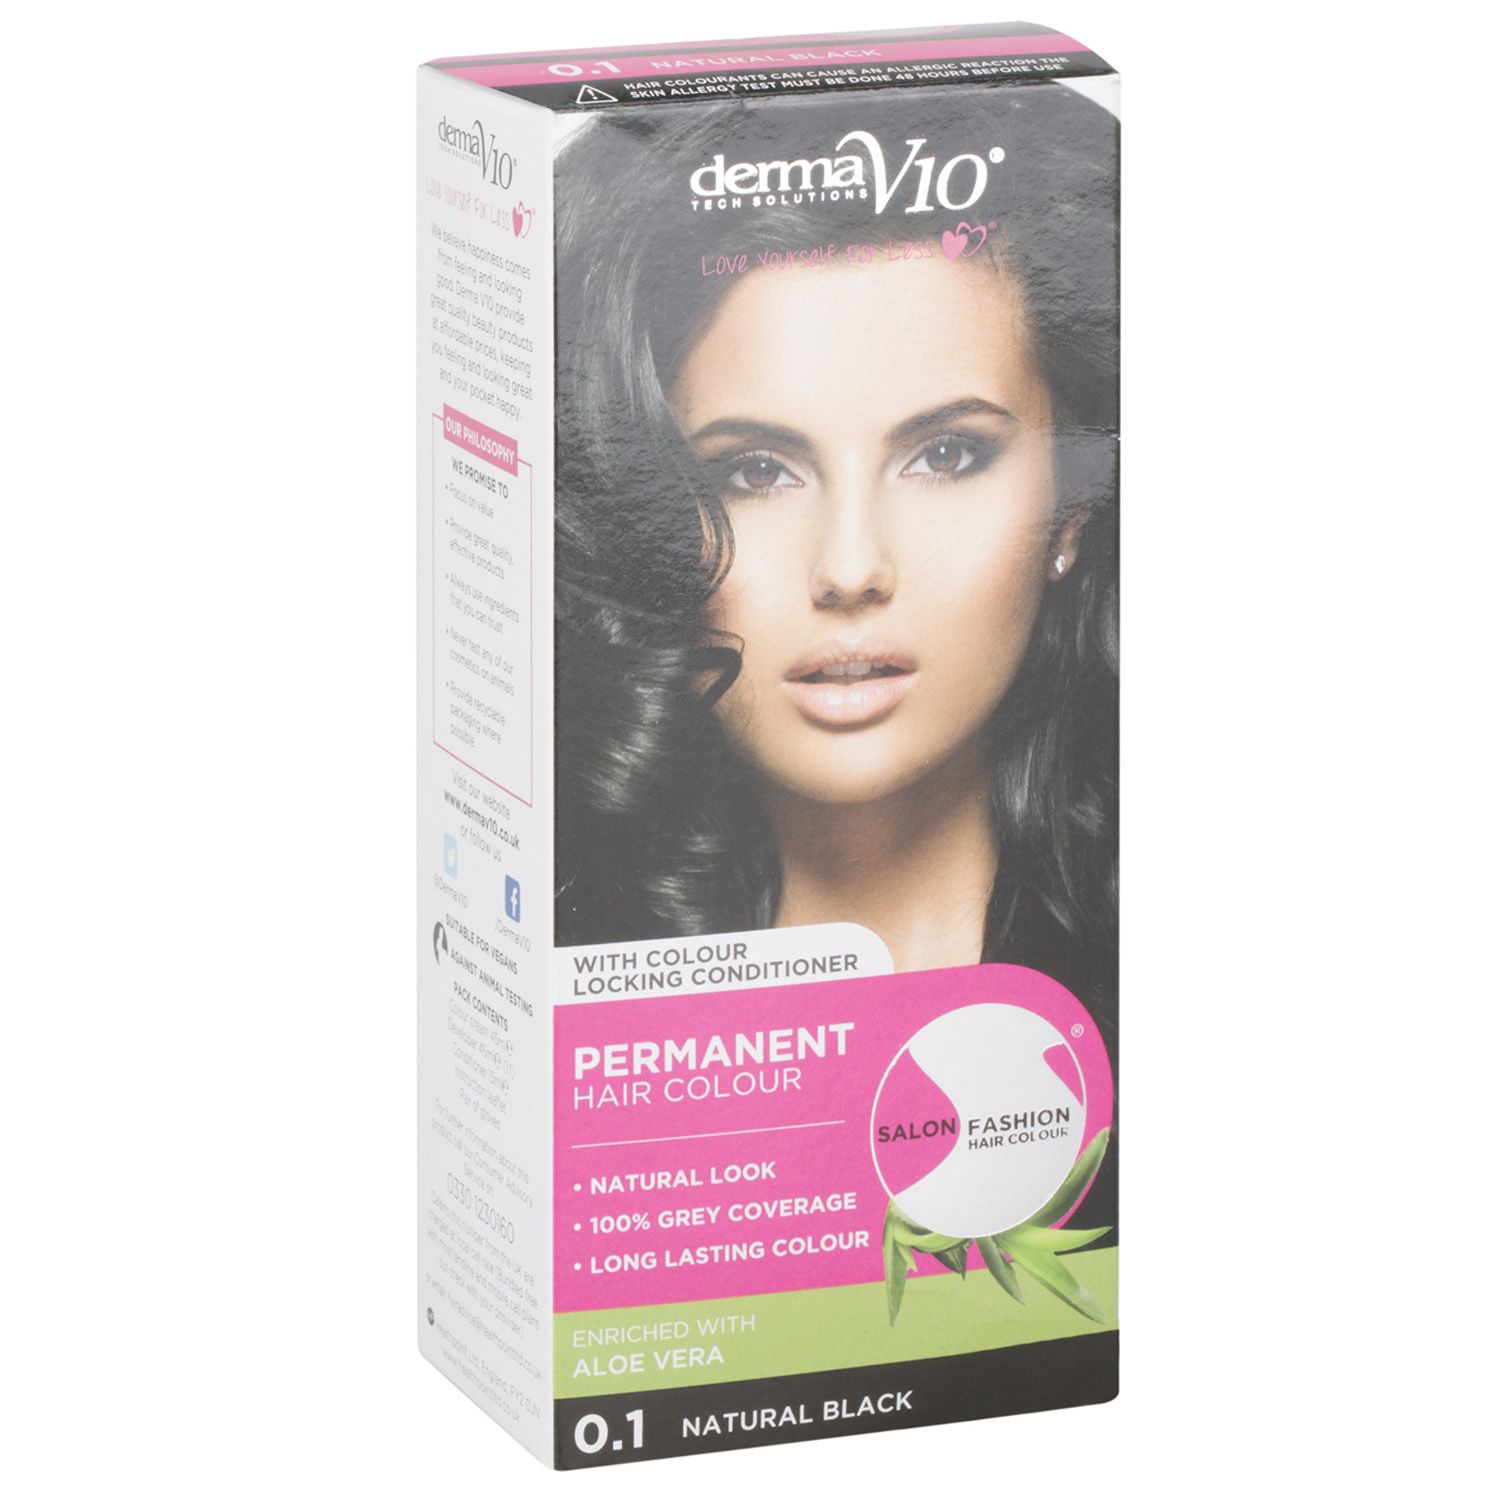 DermaV10 Salon Fashion Natural Black Permanent Hair Dye Image